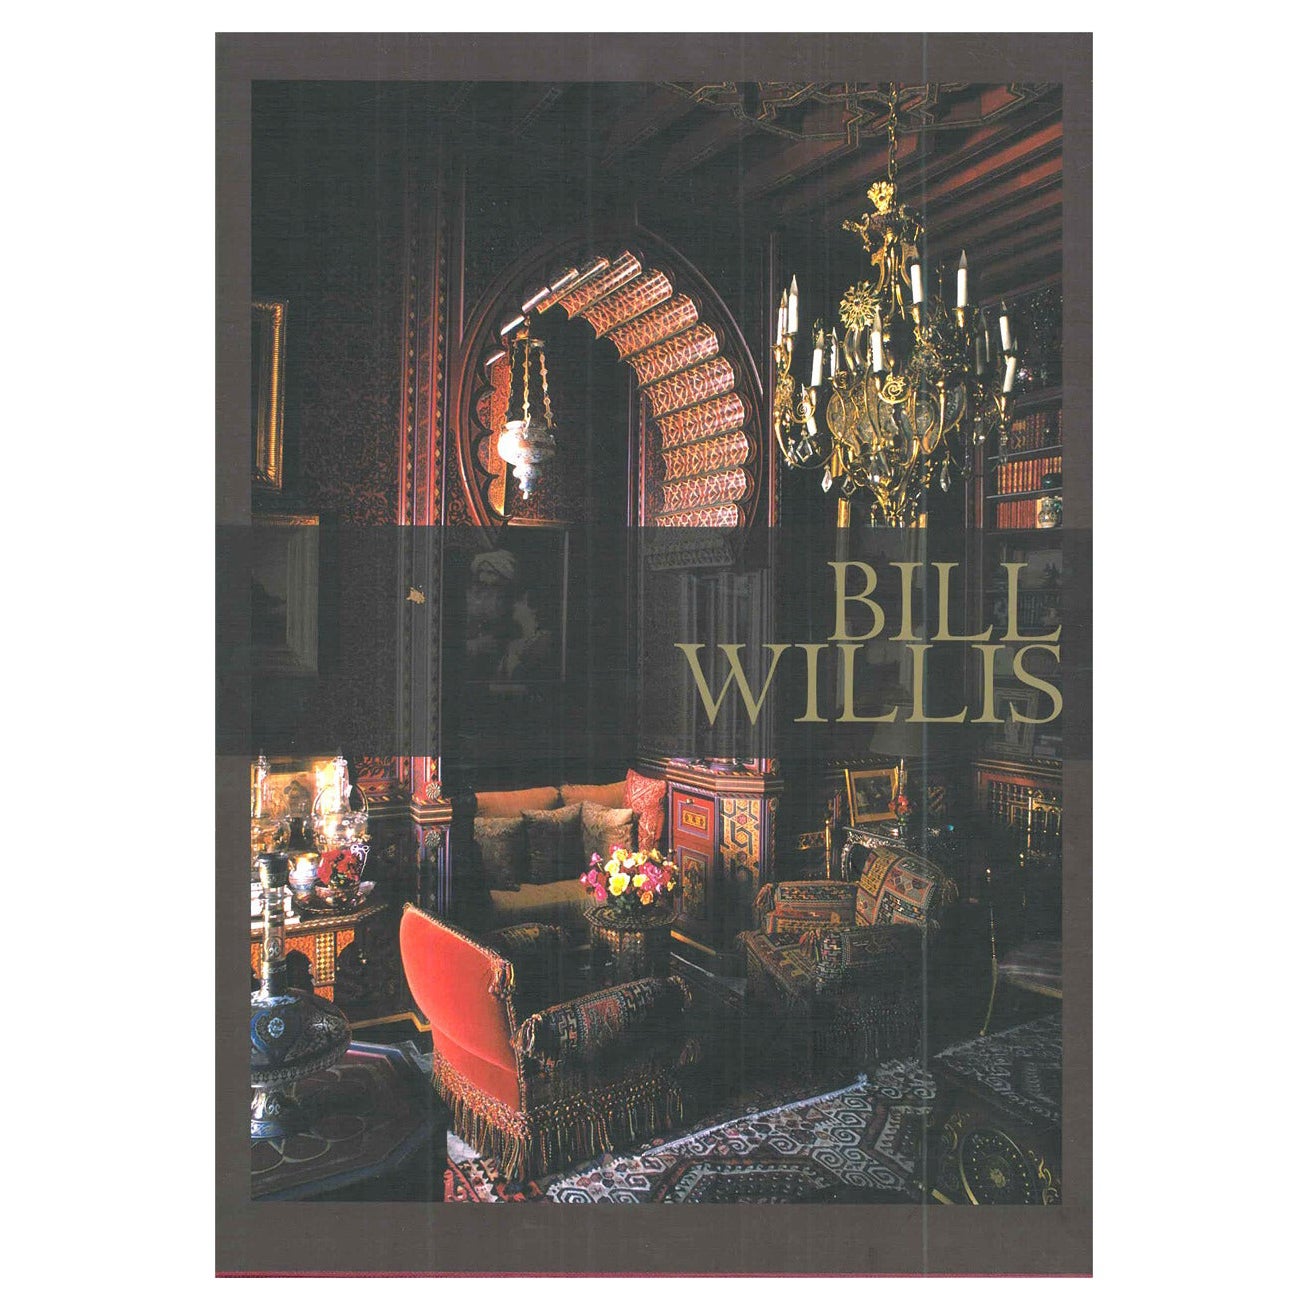 Bill Willis 'Book'